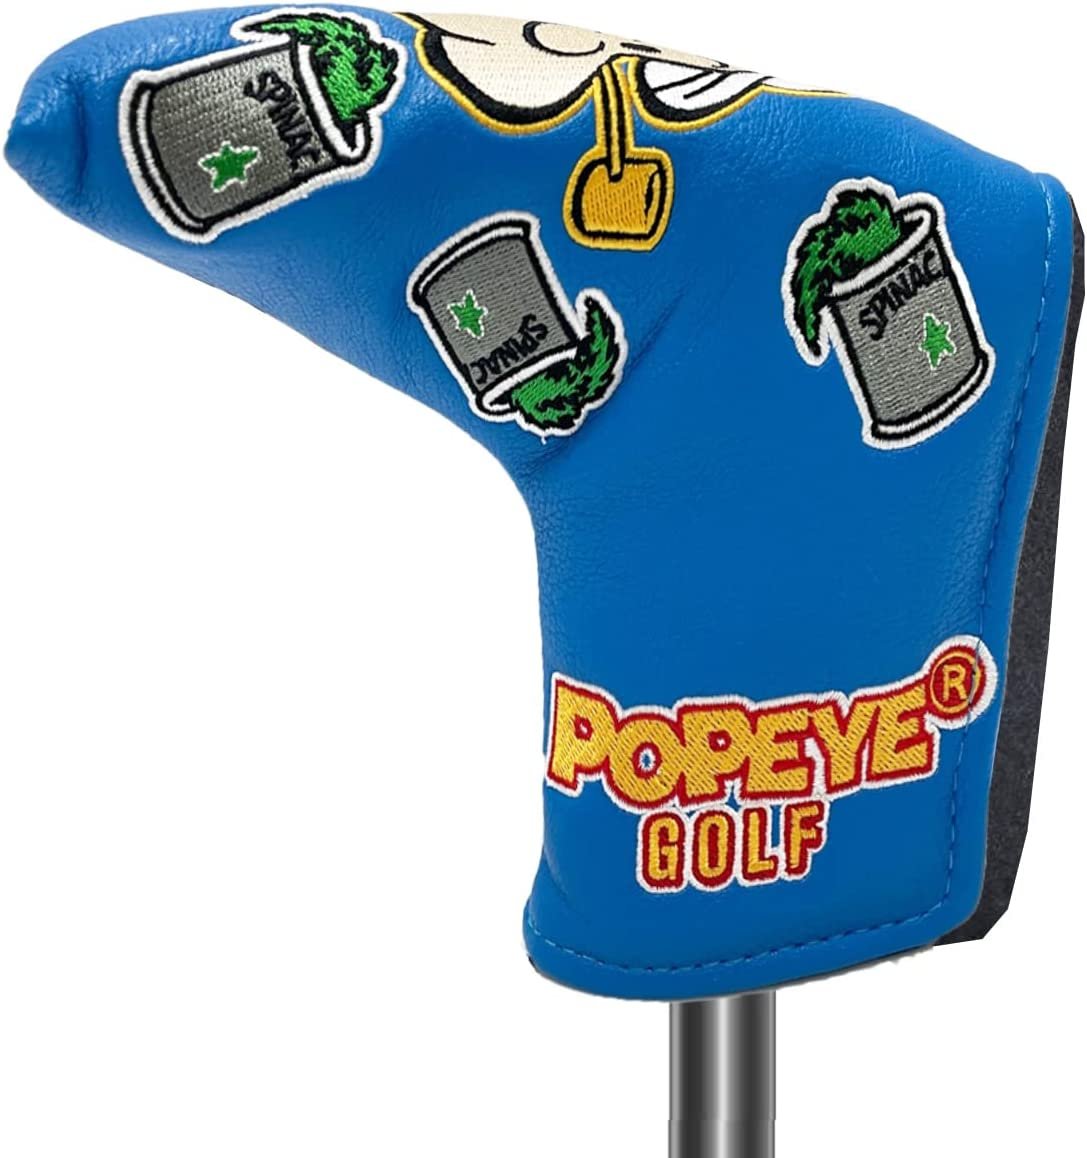 Popeye Golf Blade Golf Putter Headcover